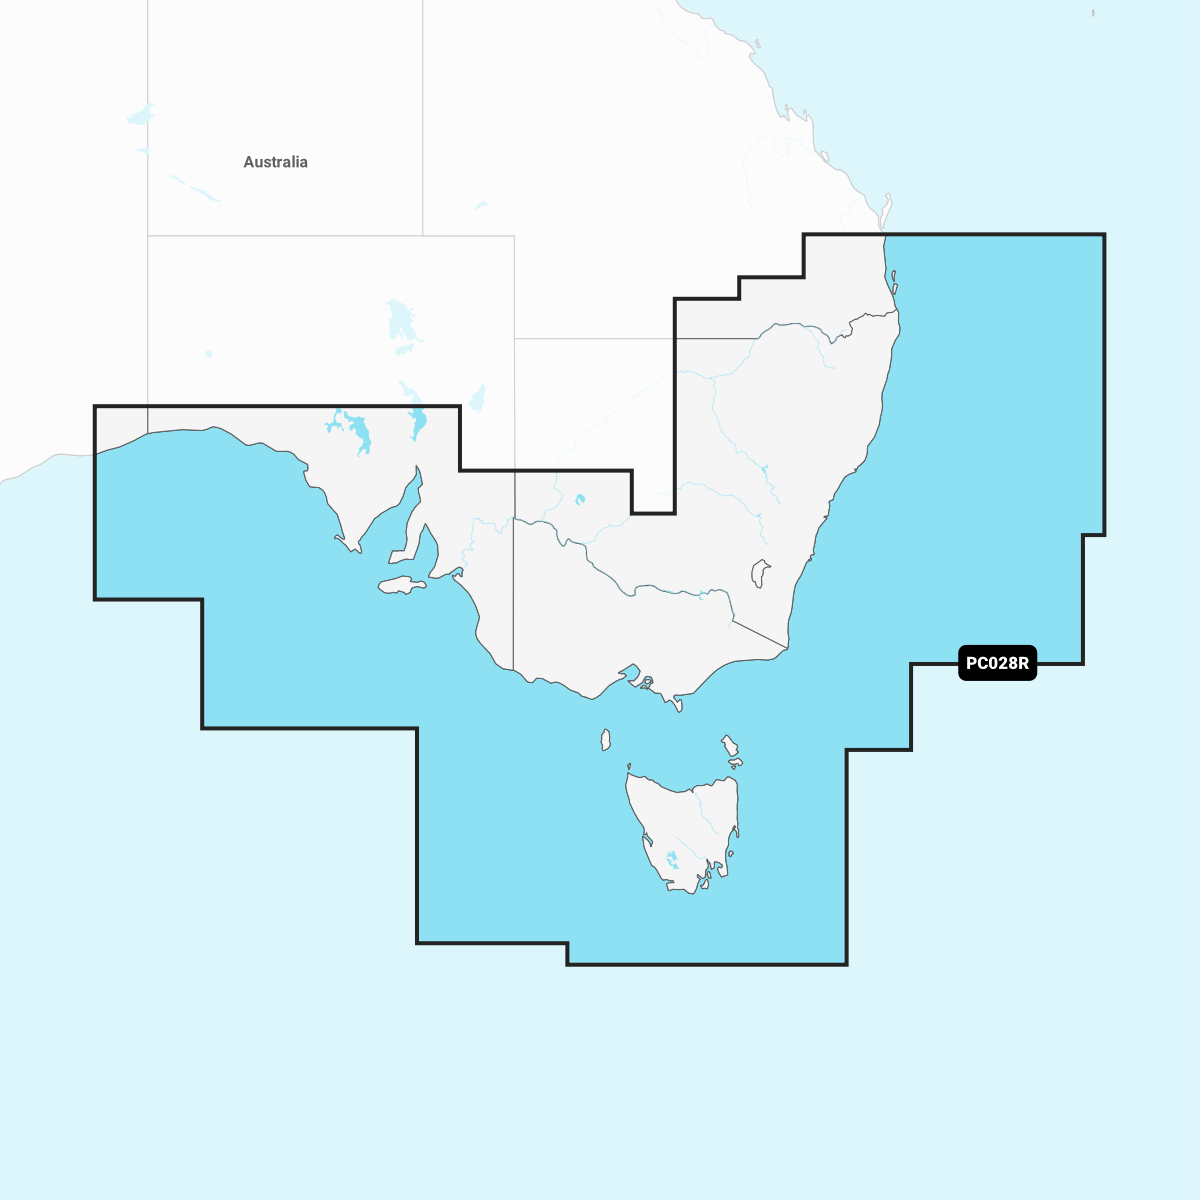 GARMIN NAVIONICS+ CHART PC028R: Australia, Southeast